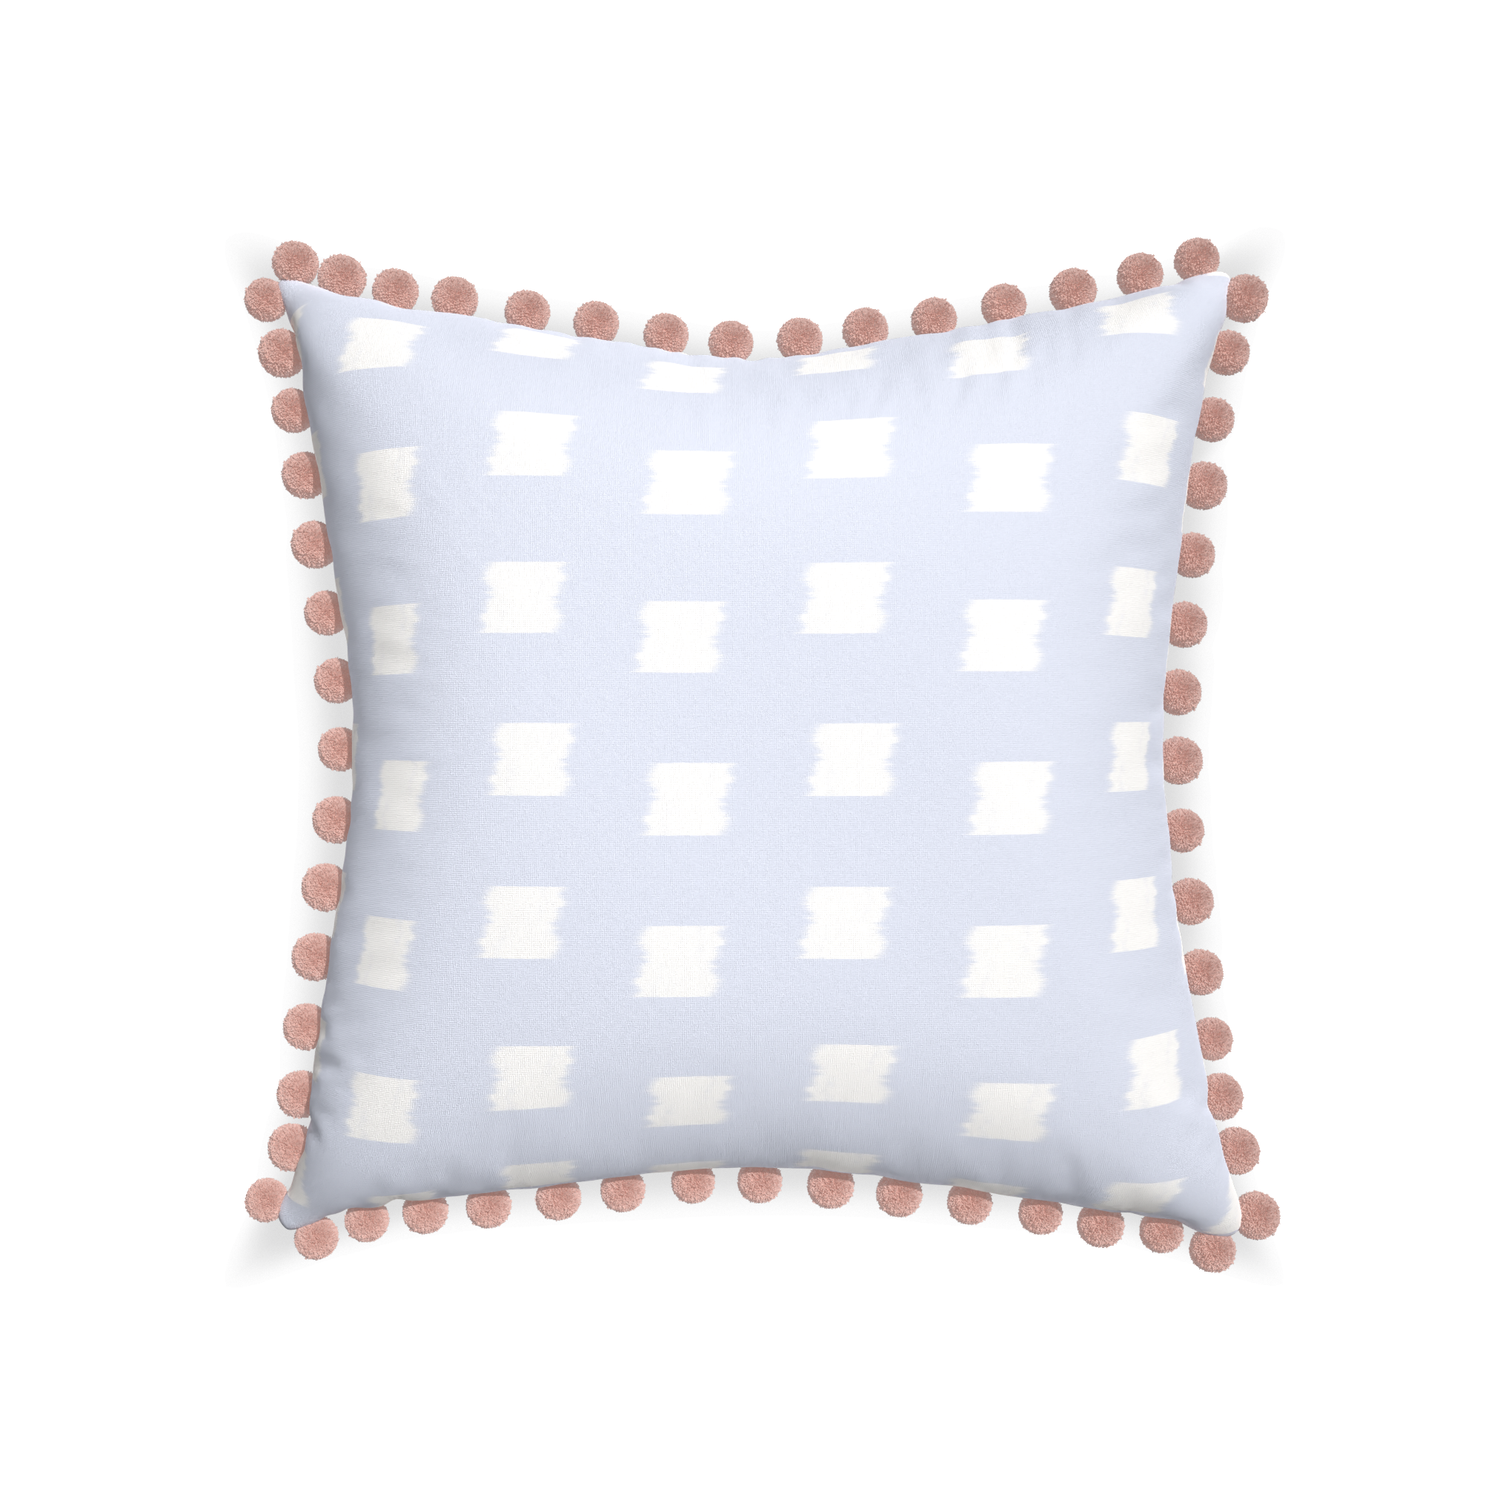 22-square denton custom sky blue patternpillow with rose pom pom on white background